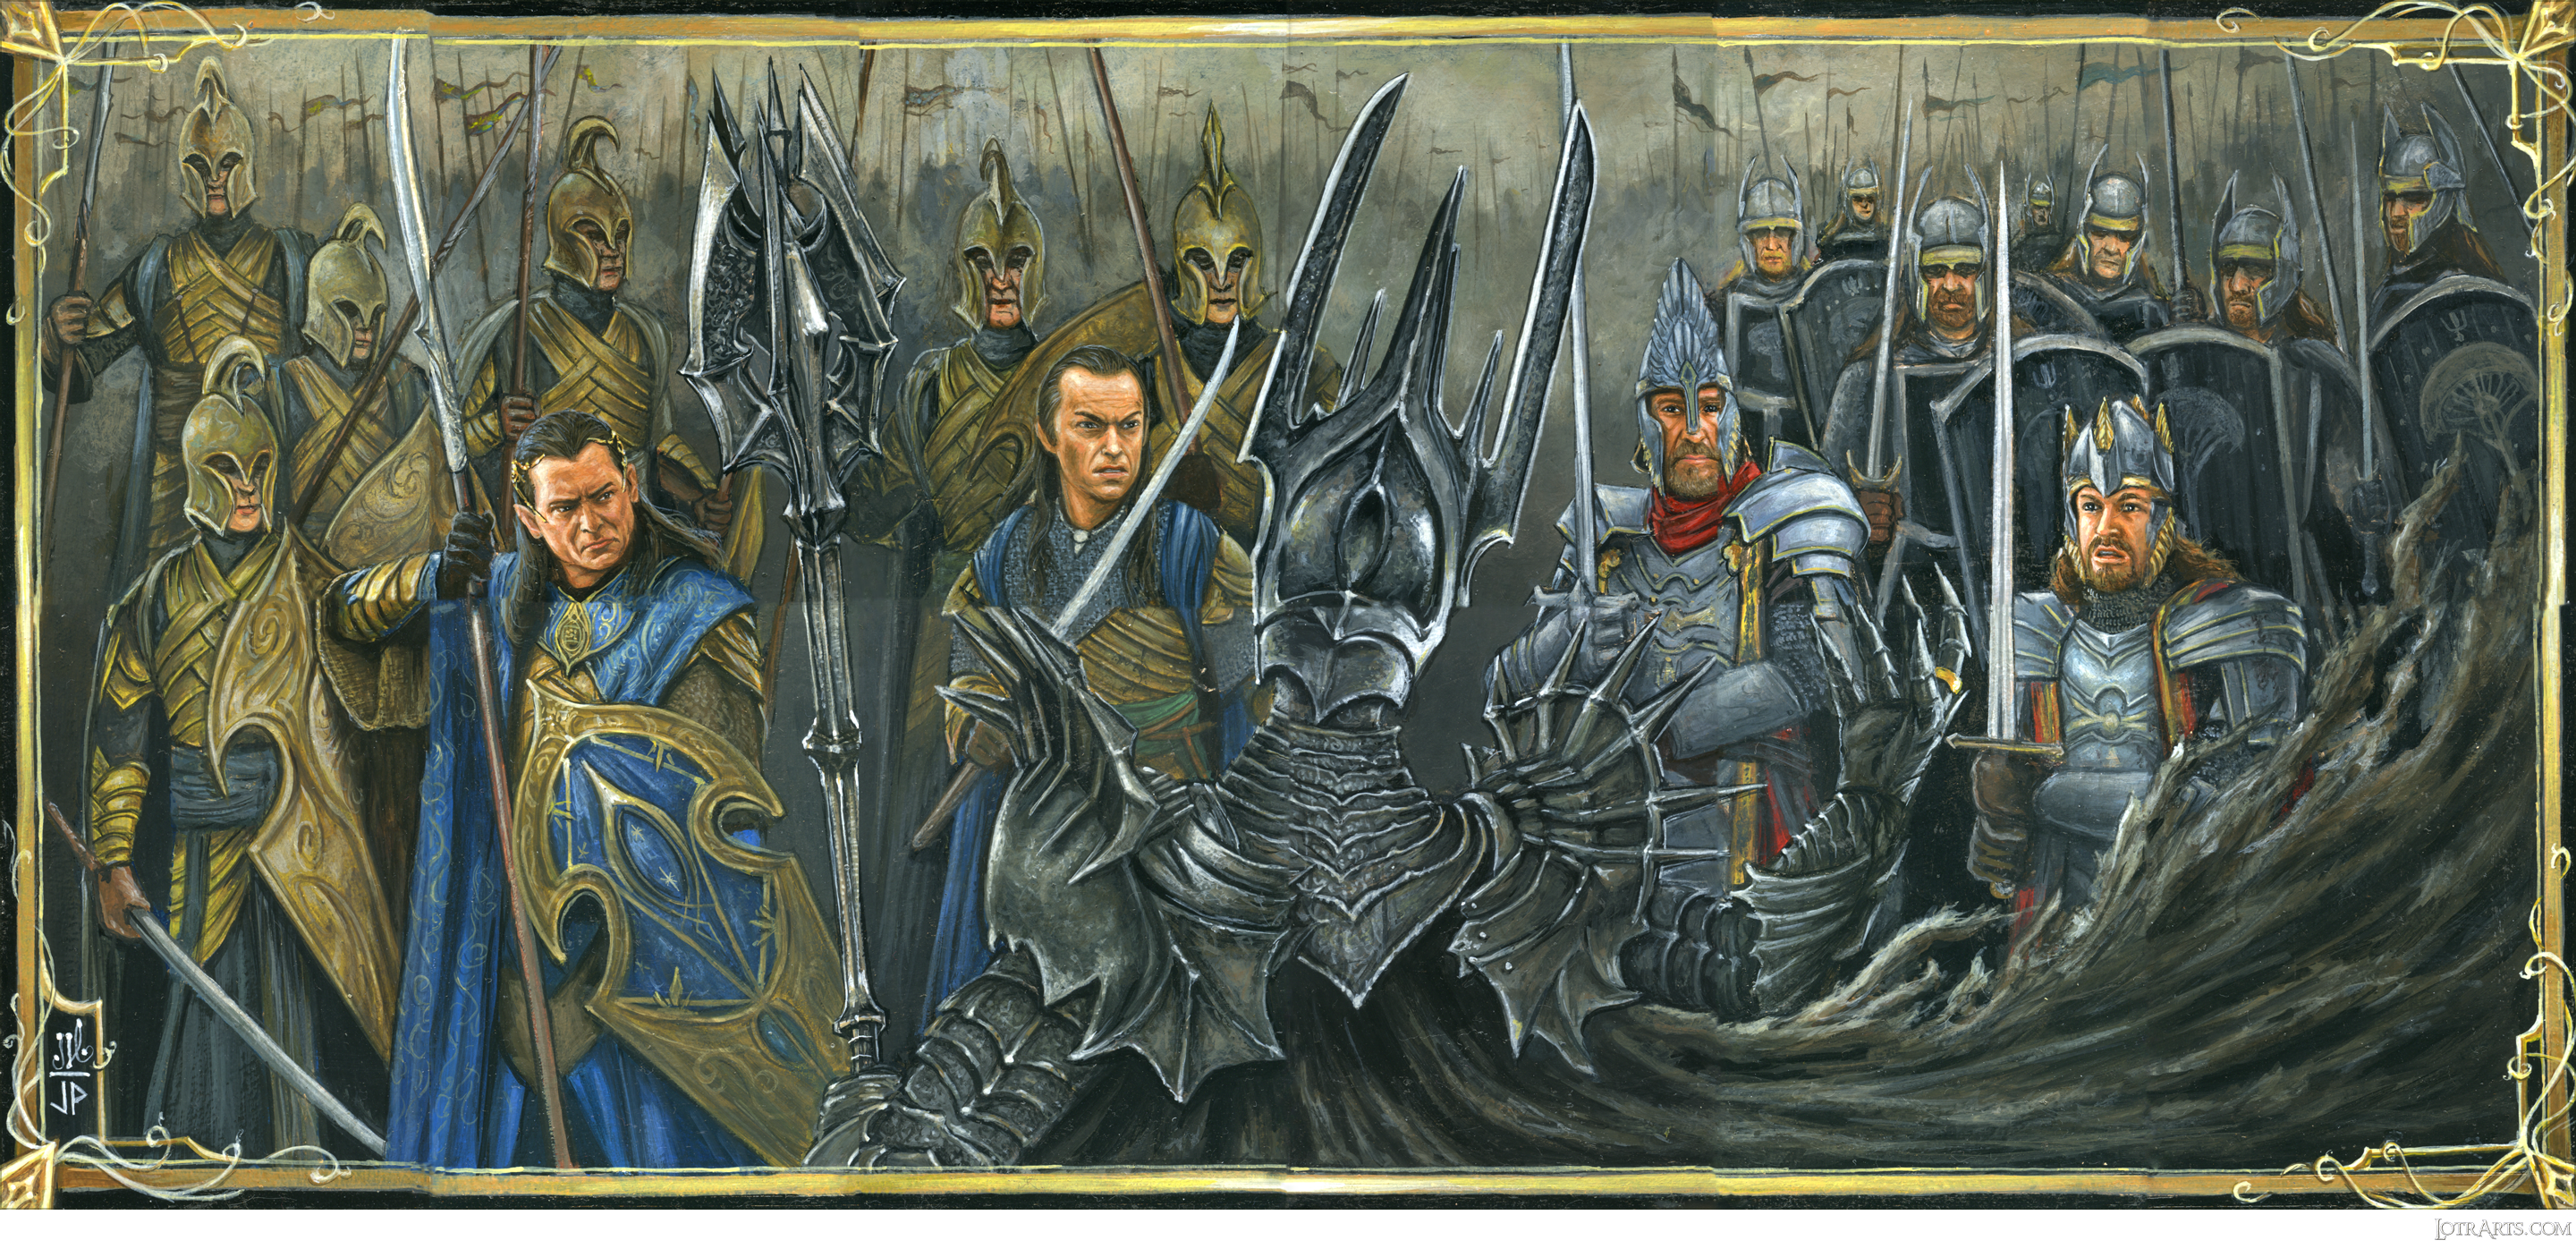 Twelve-card panel of the Last Alliance battling Sauron by Potratz and Hai<span class="ngViews">9 views</span>